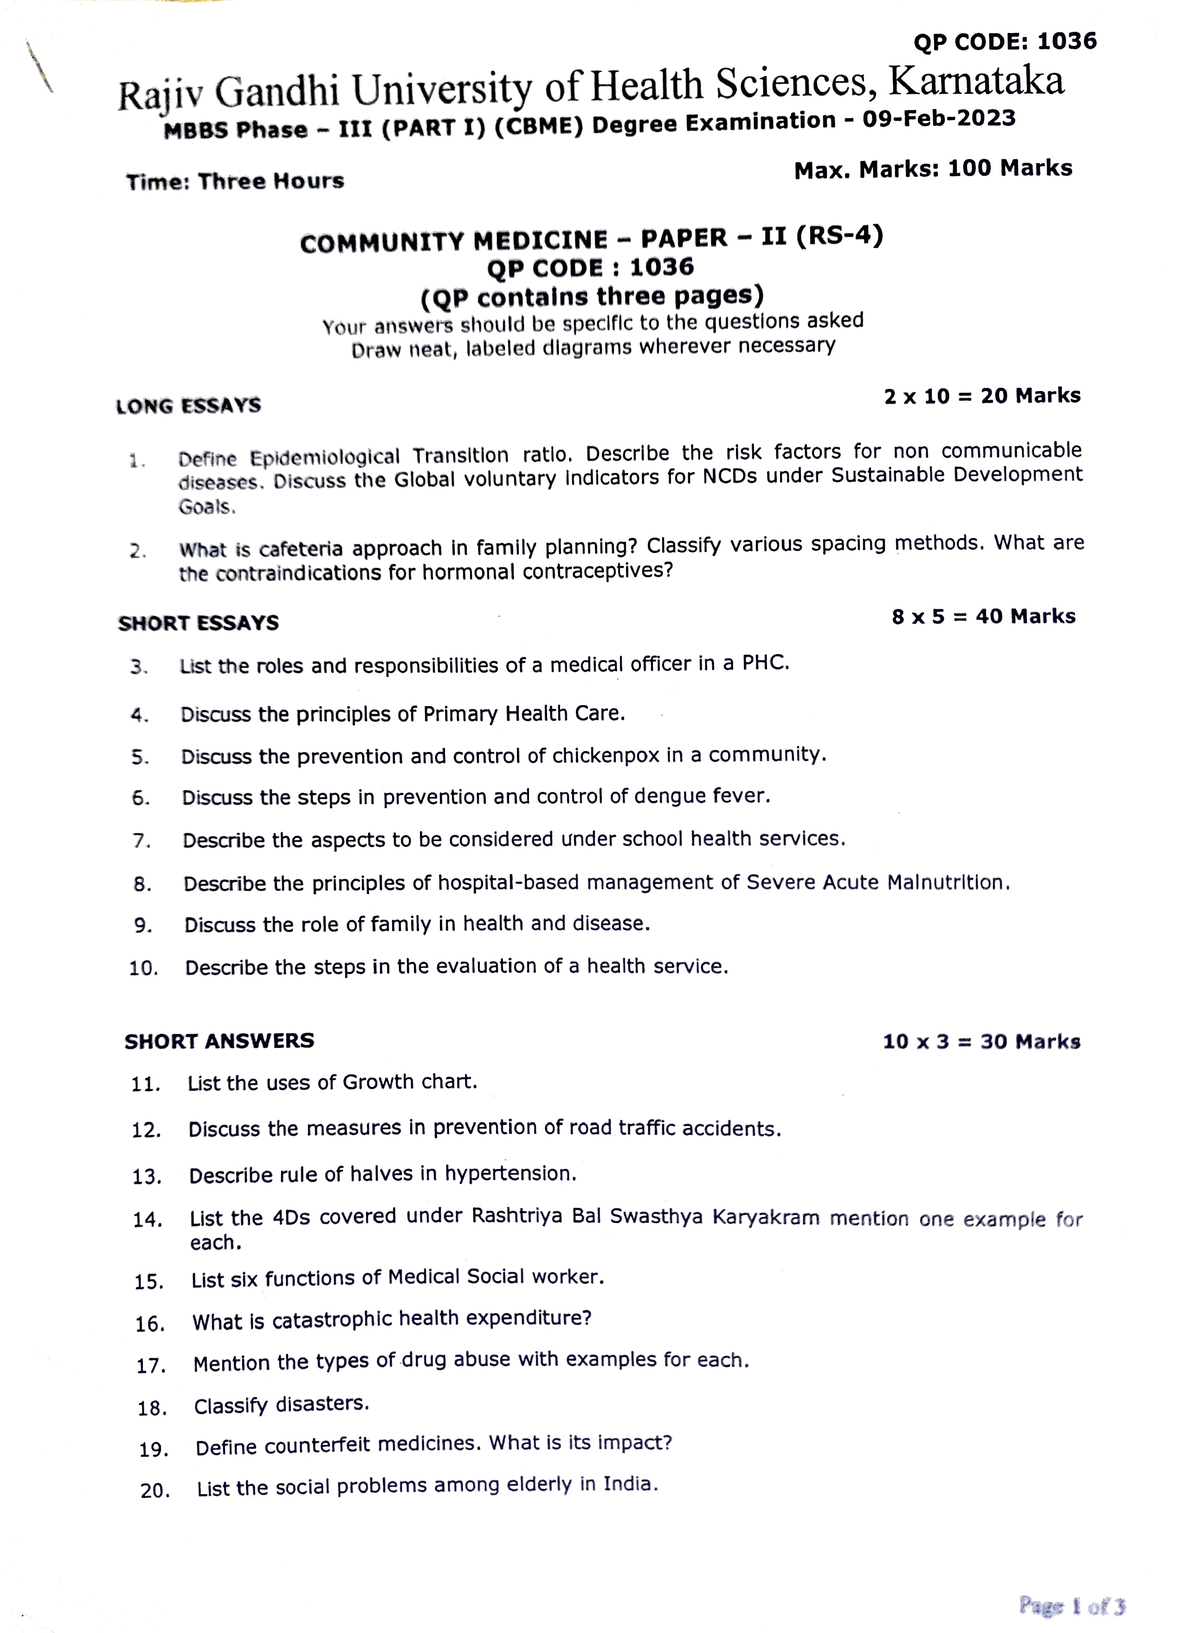 rguhs thesis topics in community health nursing